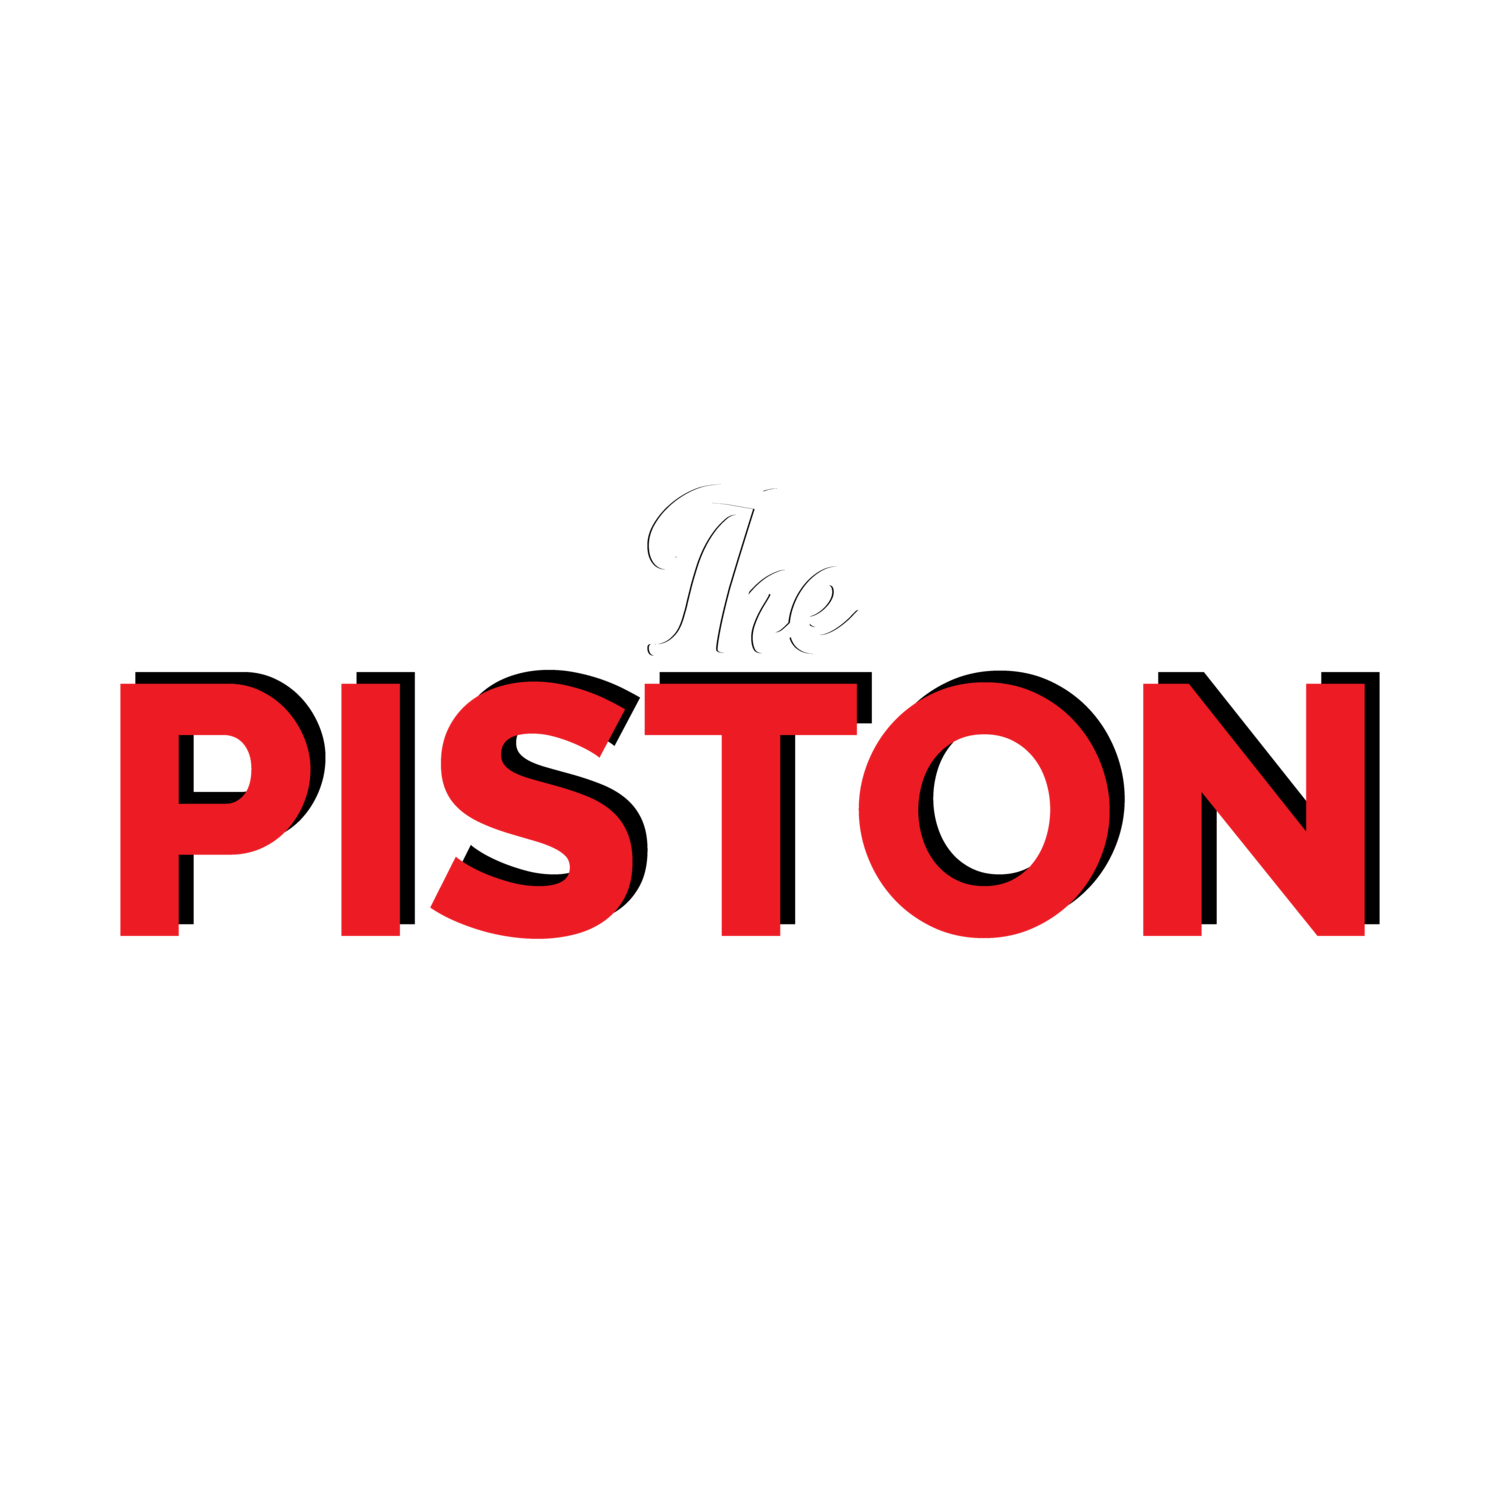 The Piston